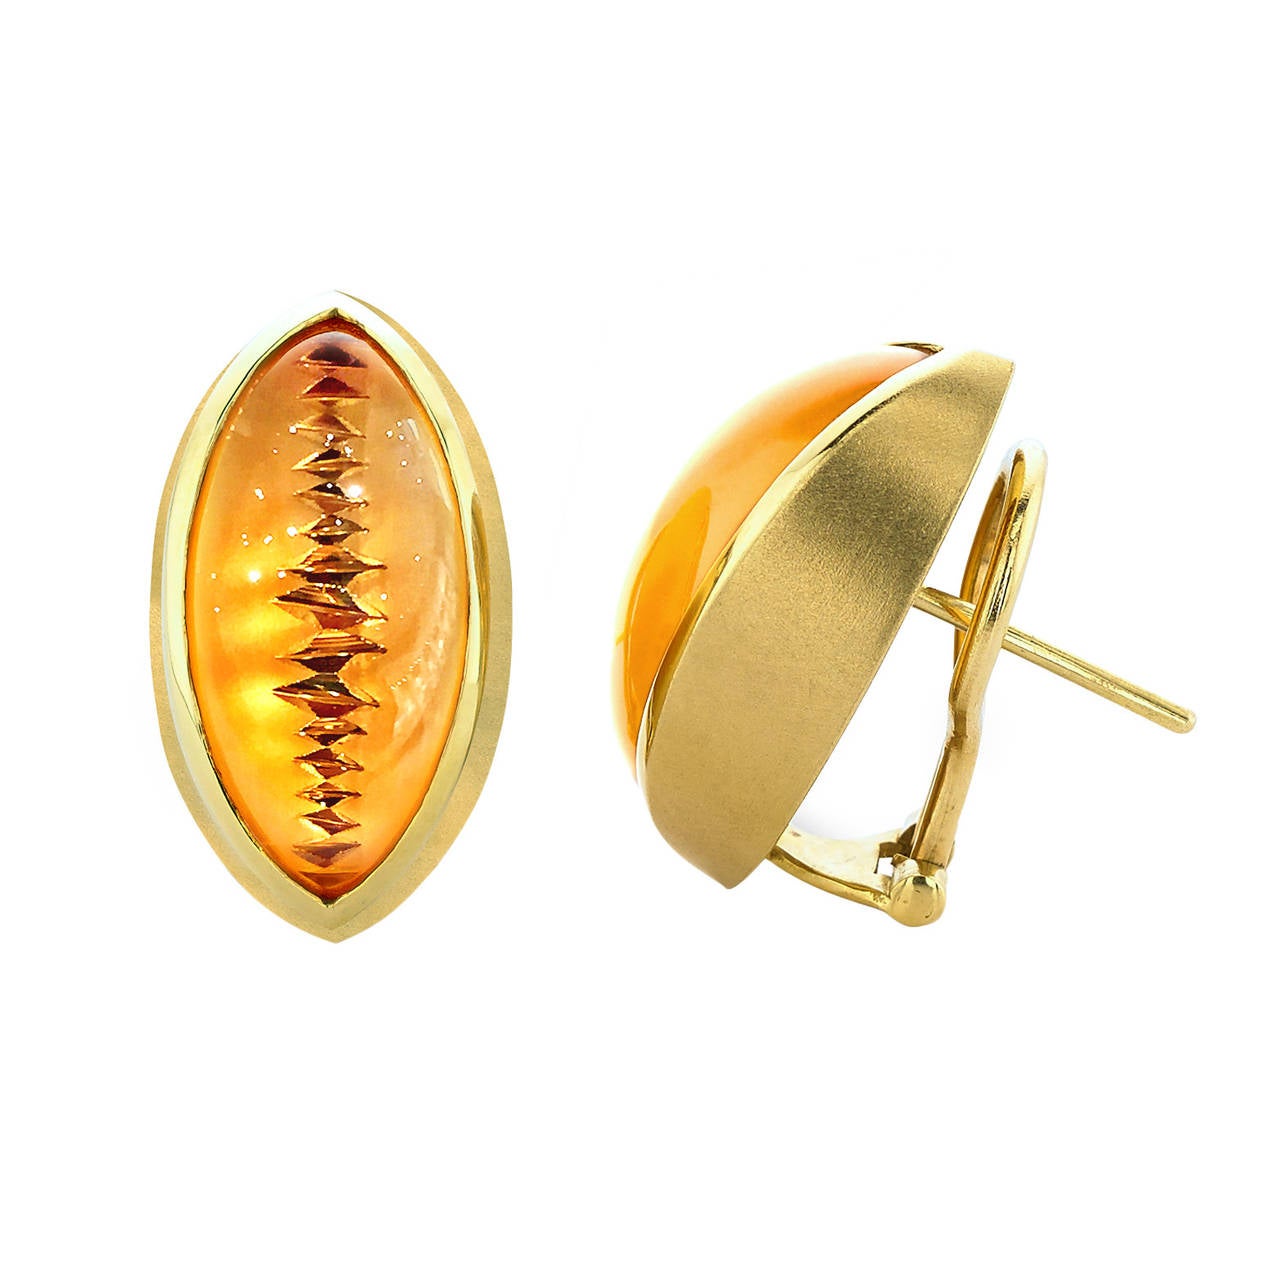 Atelier Munsteiner One-of-a-Kind Icicle-Cut Vivid Orange Citrine Gold Earrings